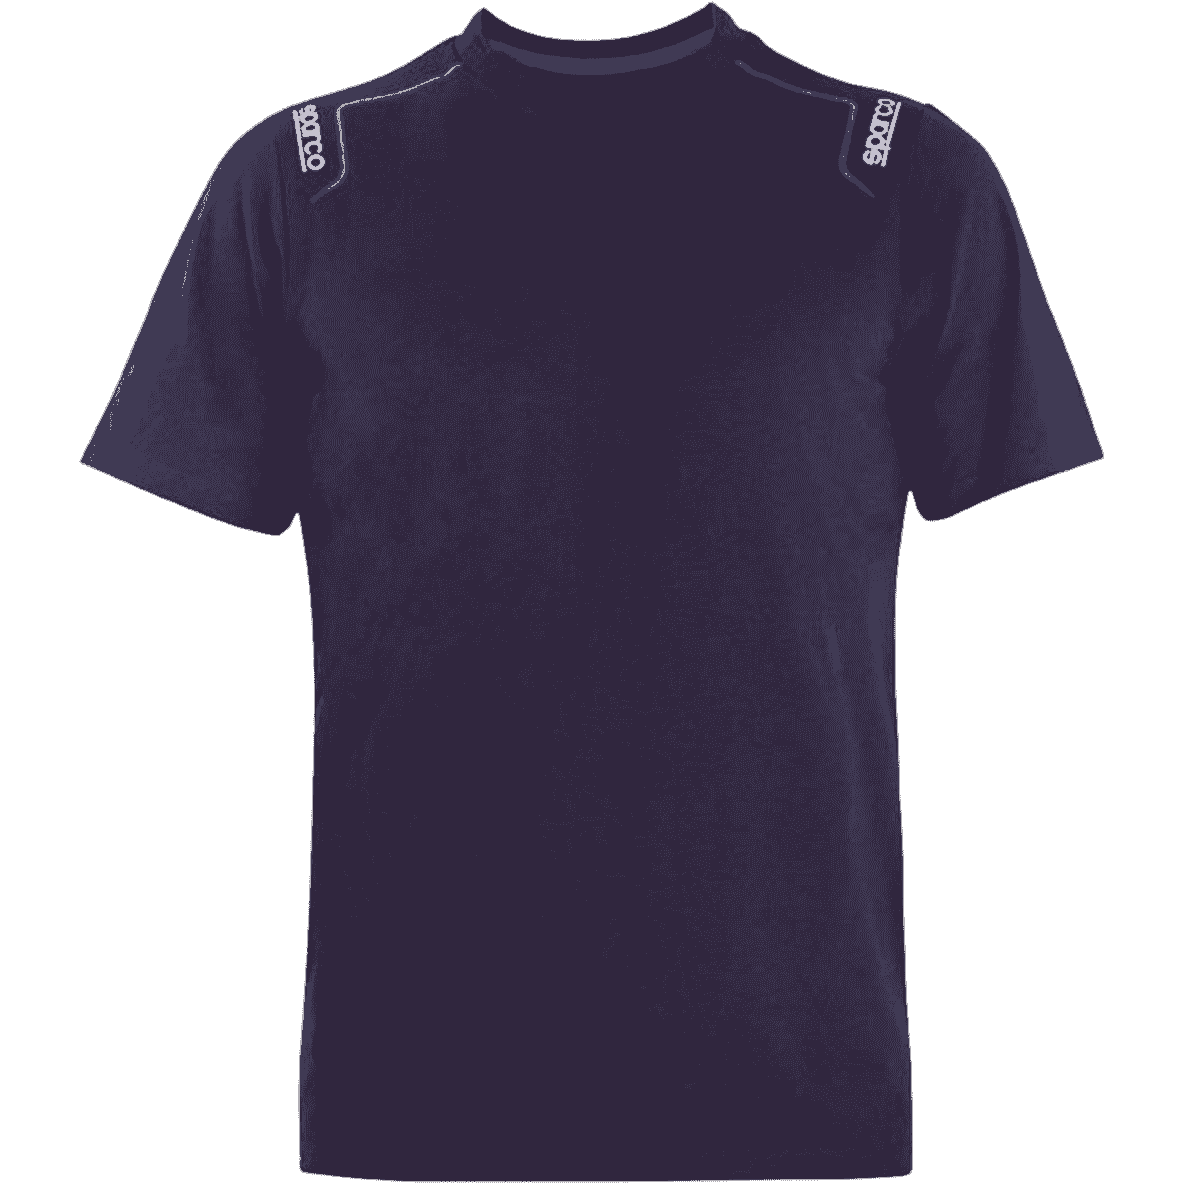 Camiseta Sparco Trenton Elástica Navy